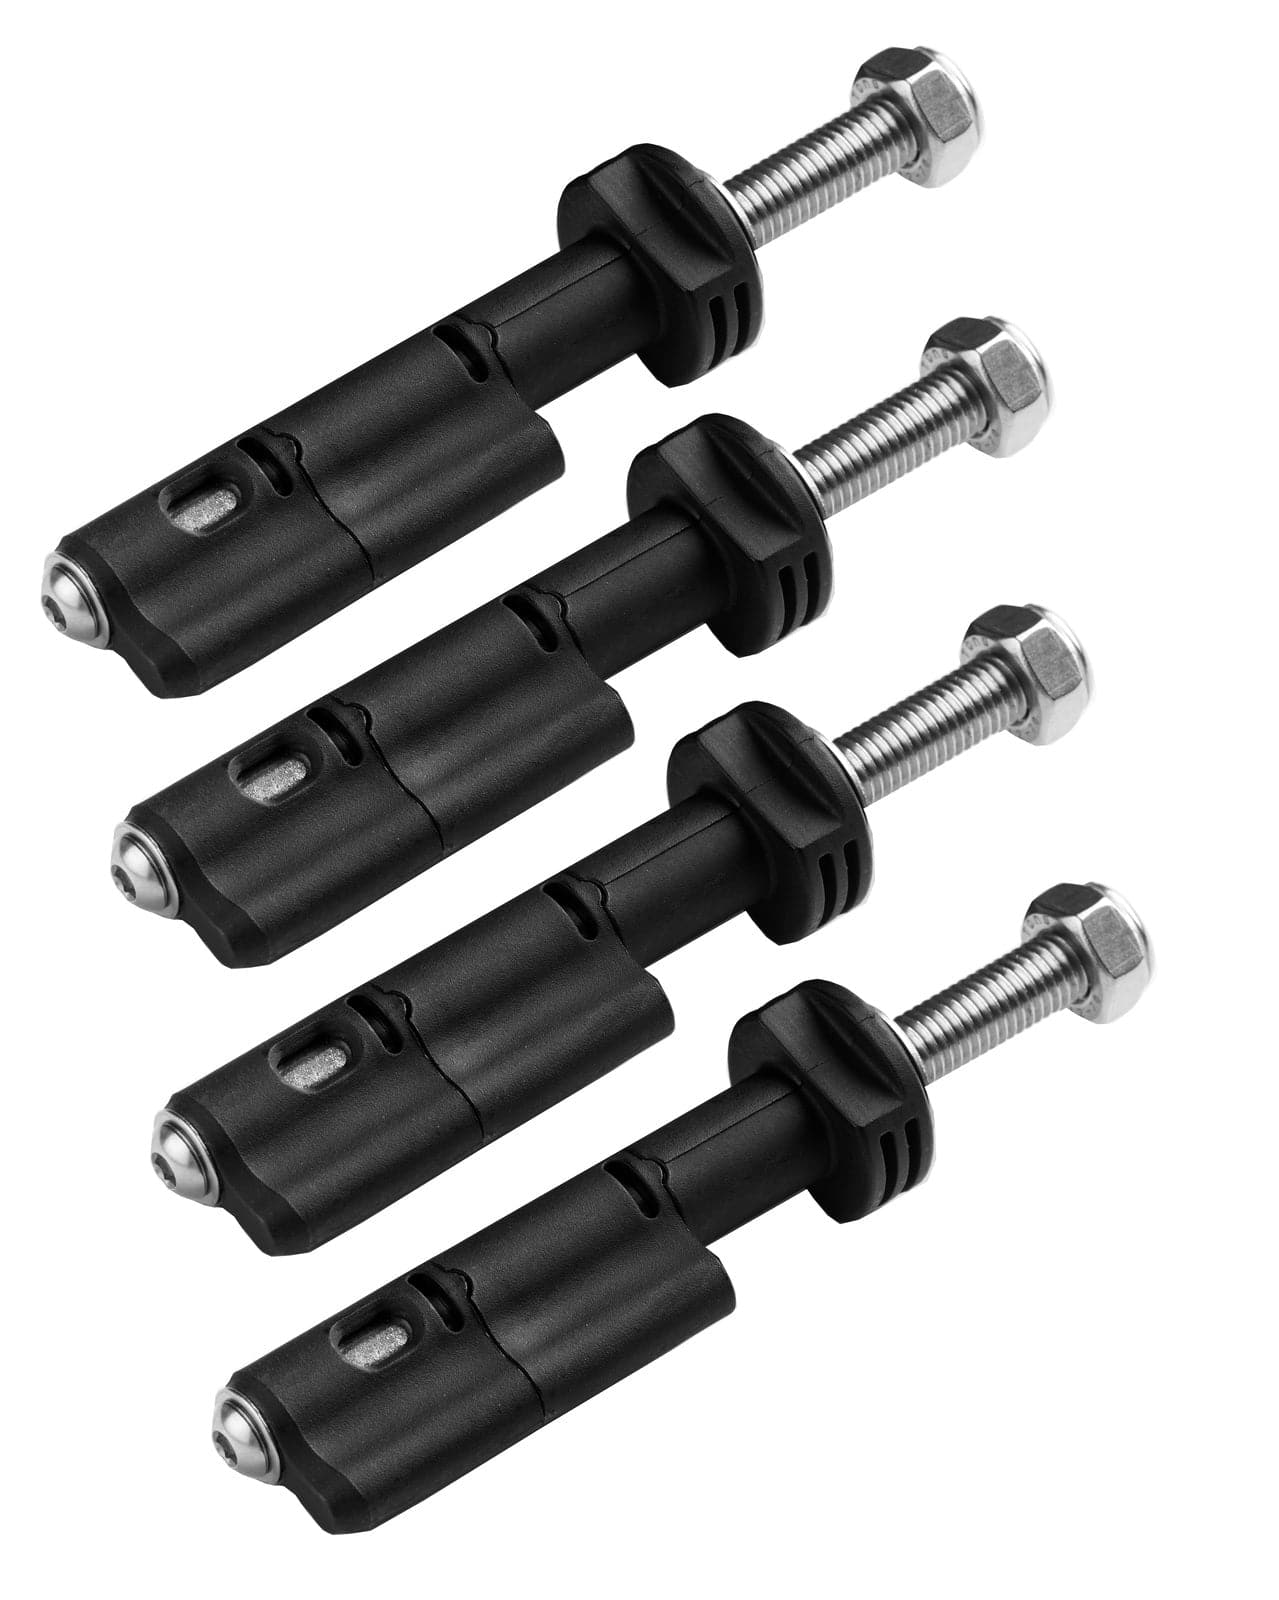 MAXTRAX Mounting Pin Set - MKII (17mm) - Essential4x4